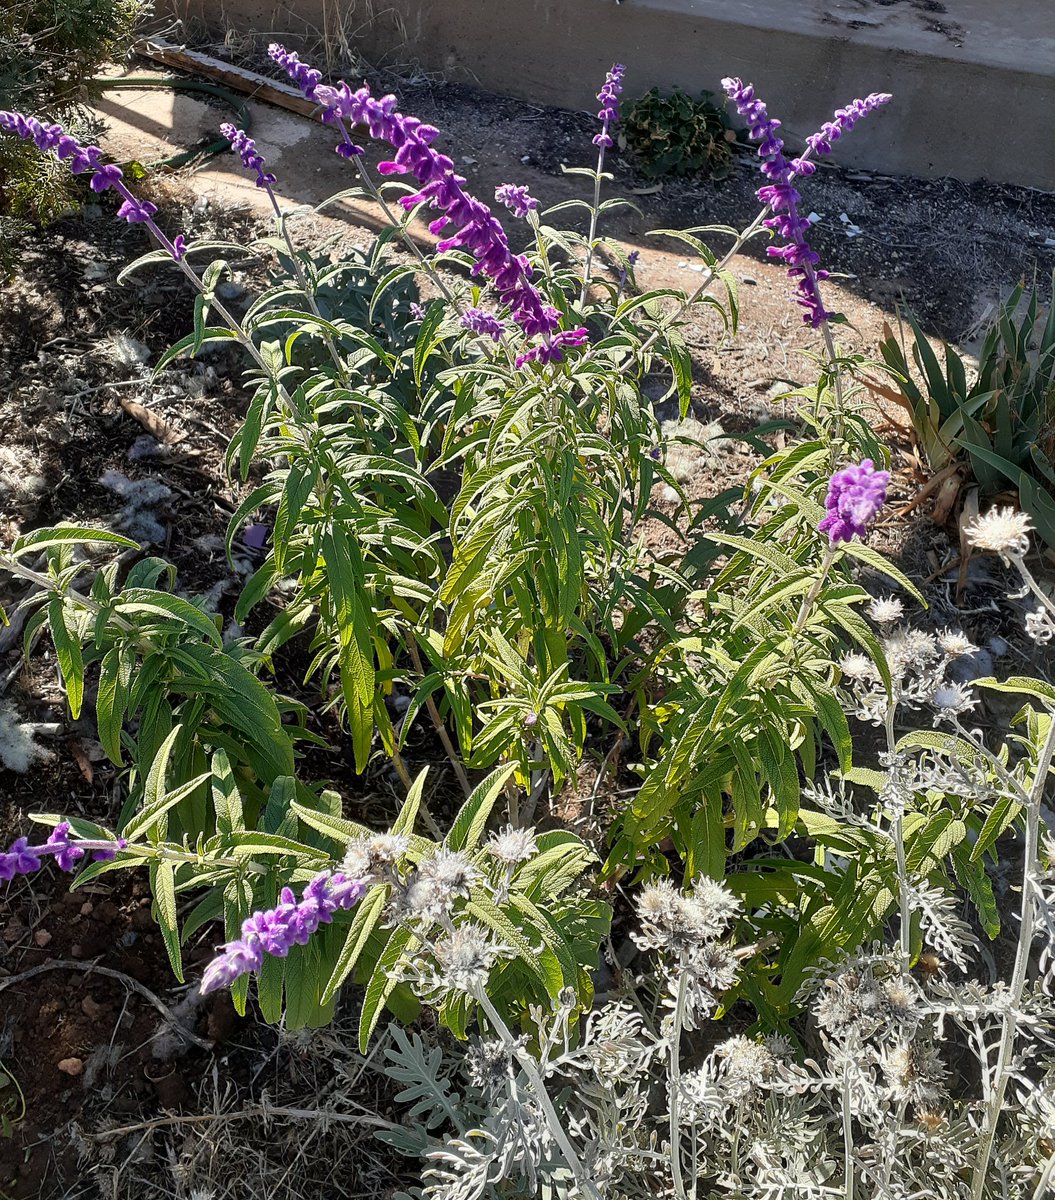 Mexican Sage, Salvia mexicanus a real autumn garden treat! 💜

#plantwhisperer #GardeningX #Flowers #FlowersOfTwitter #flowersmakeeverythingbetter #writerslife #cottagegarden